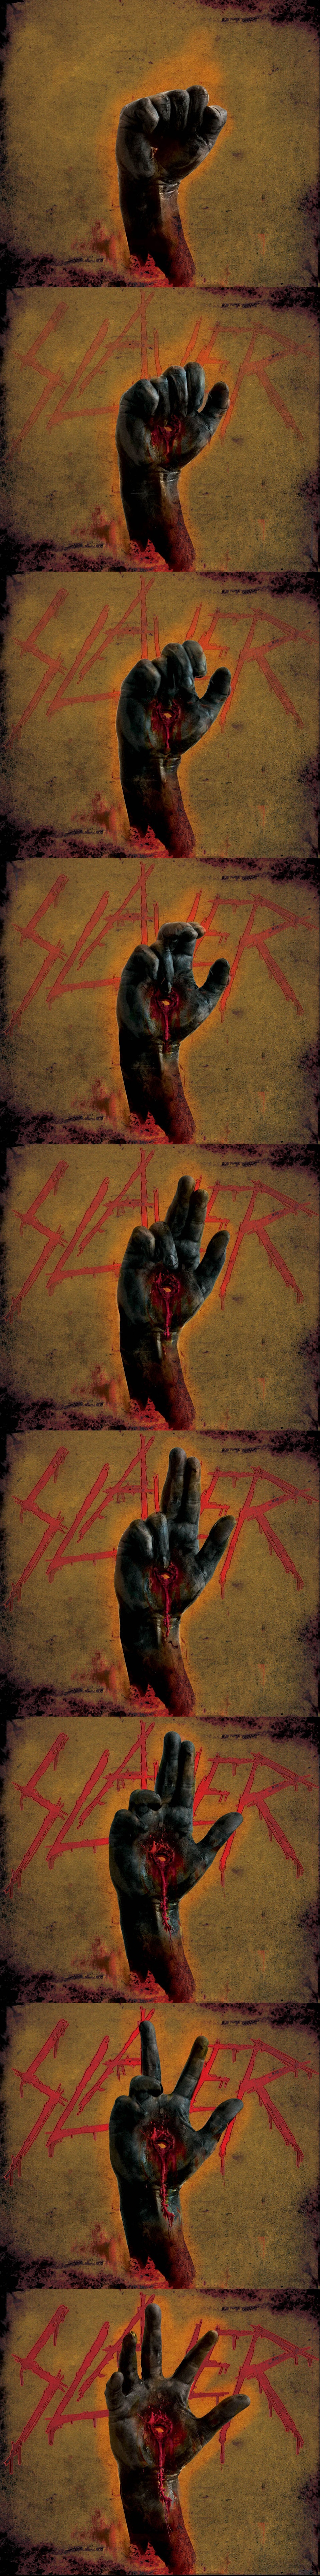 Slayer Christ Illusion - Lenticular cover